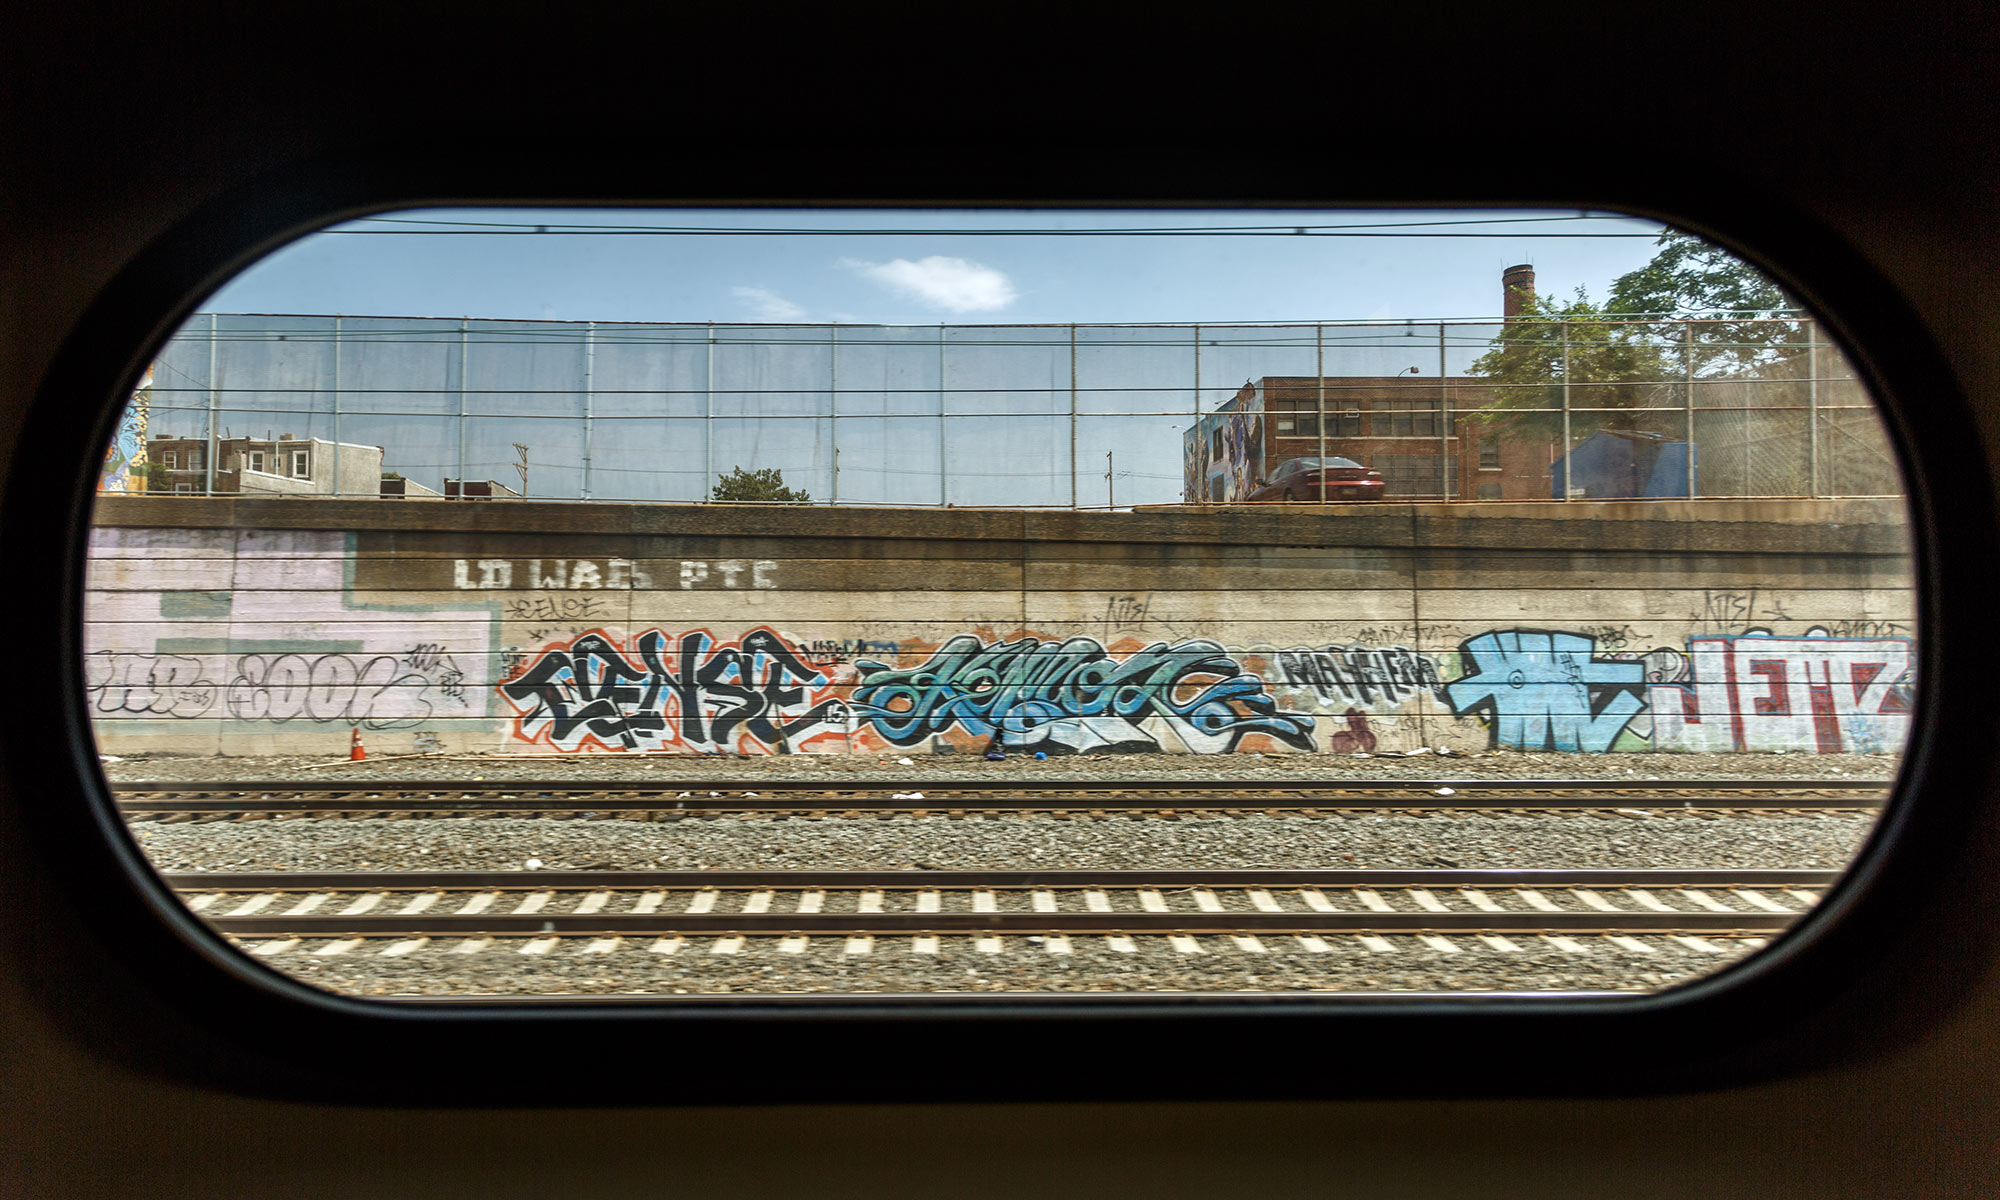 Graffiti as seen from a train window